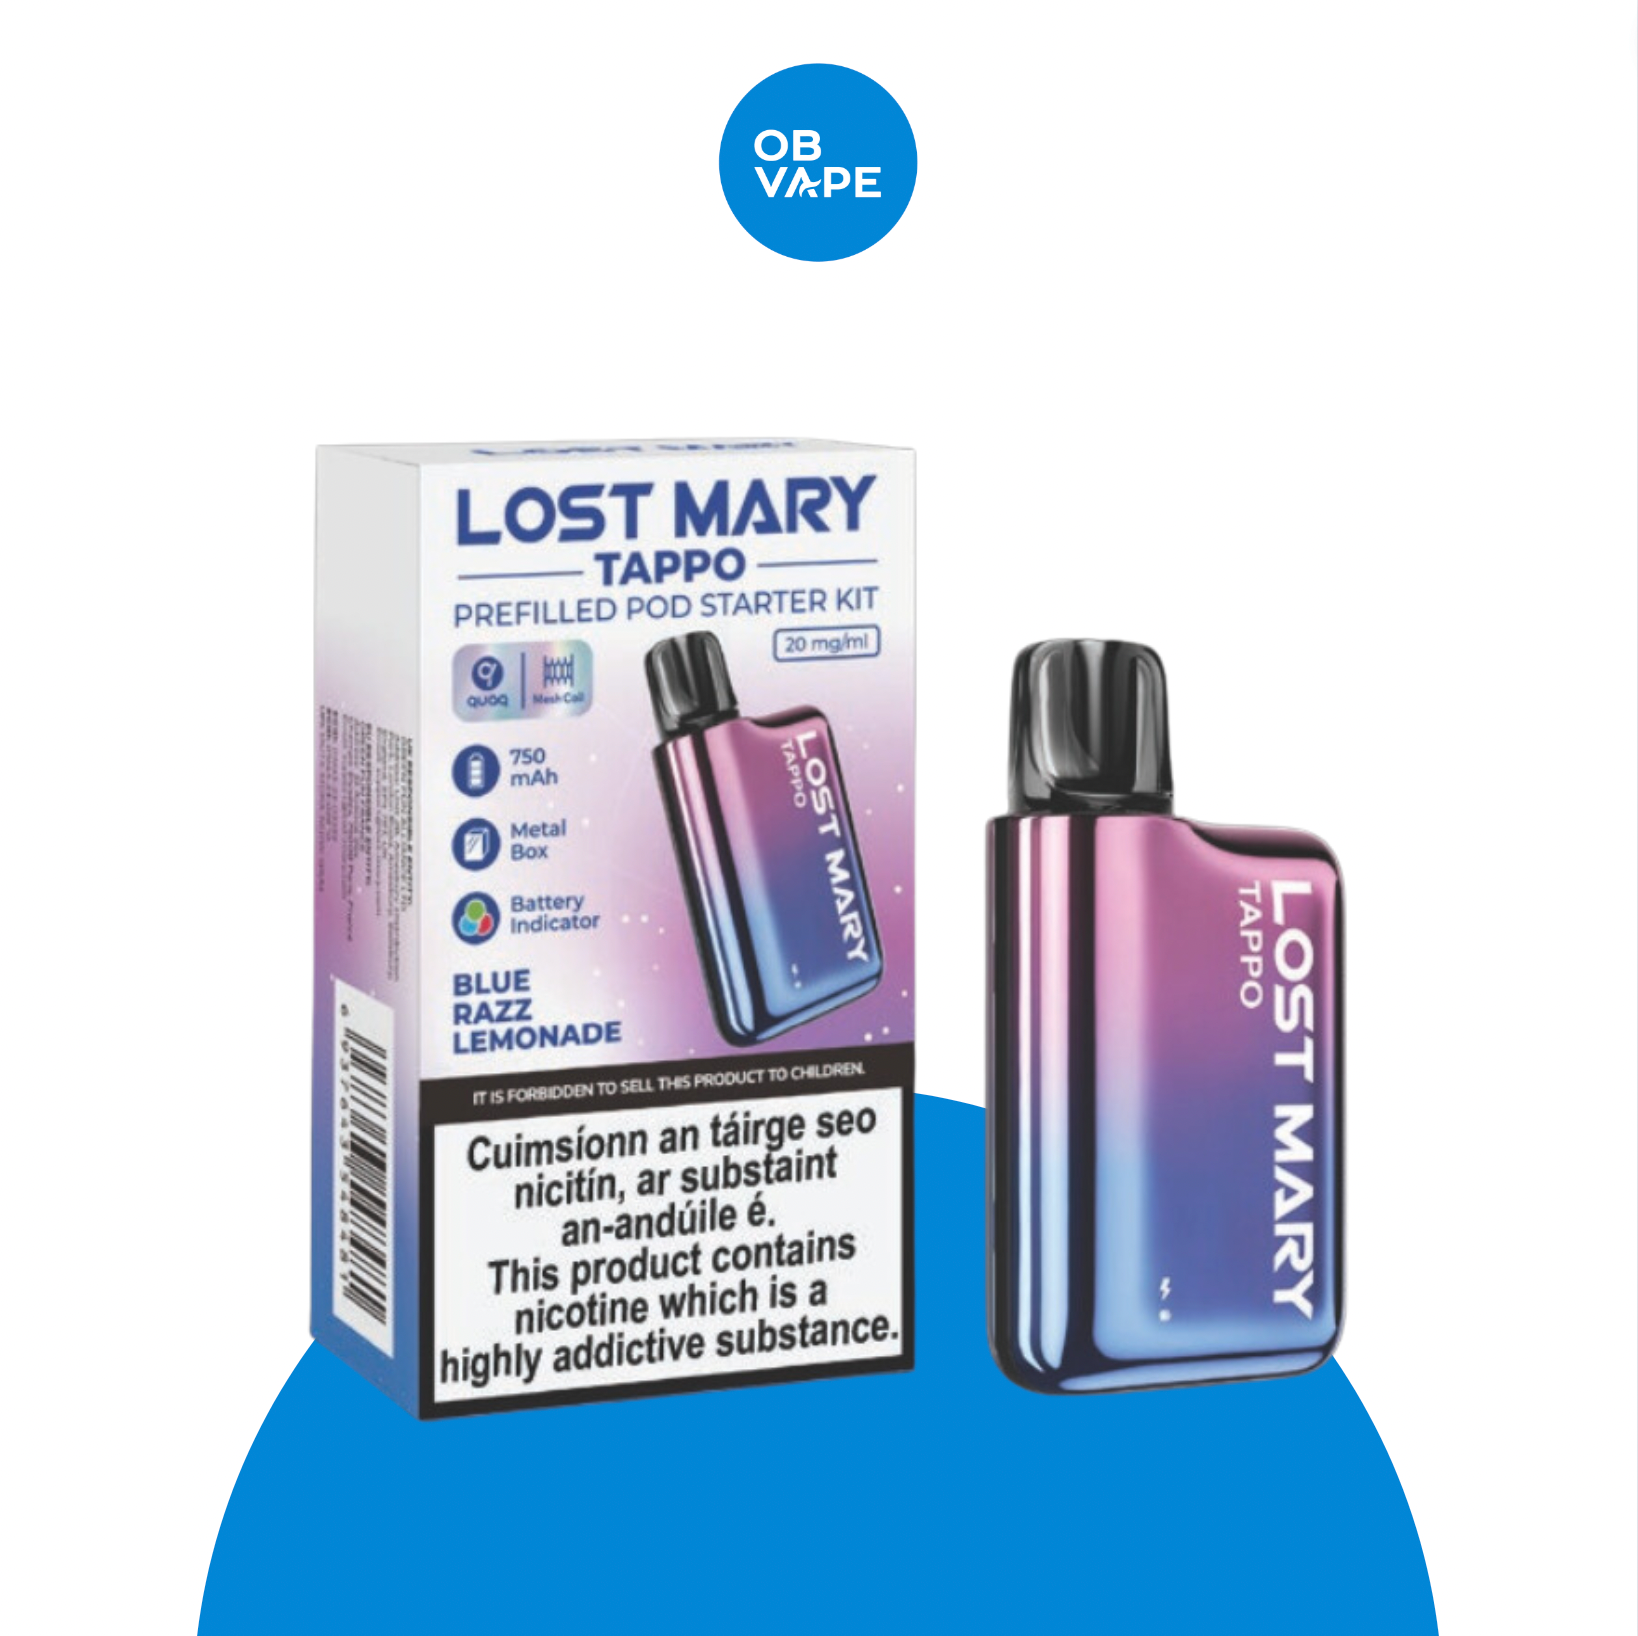 Lost Mary - Tappo Pod Starter Kit - OB Vape Shop Ireland | Free Next Day Delivery Over €50 | OB Vape Ireland's Premier Vape Shop | OB Bar Disposable Vape